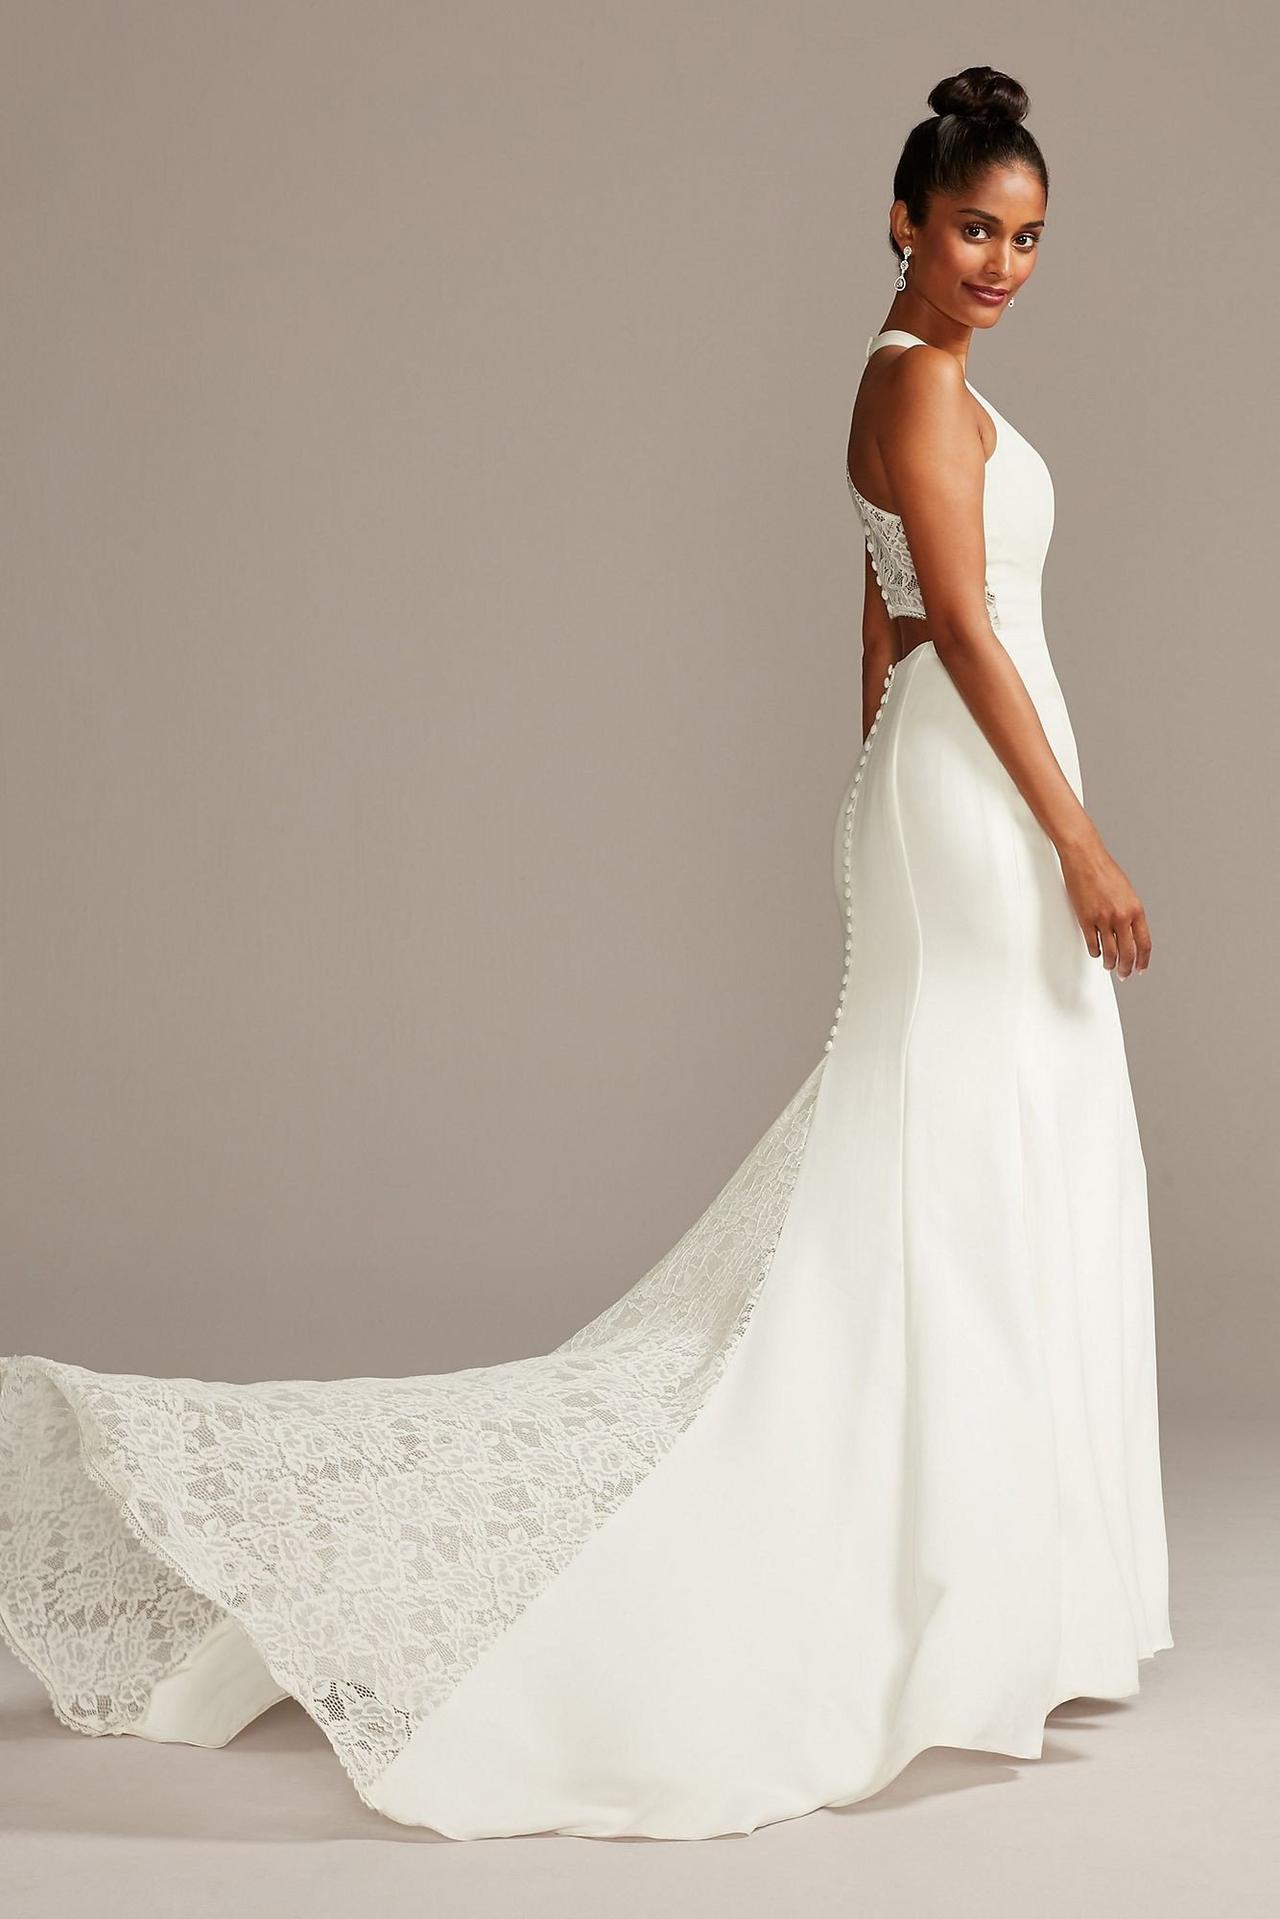 180 Bridal Lace ideas | bridal, bride, wedding gowns